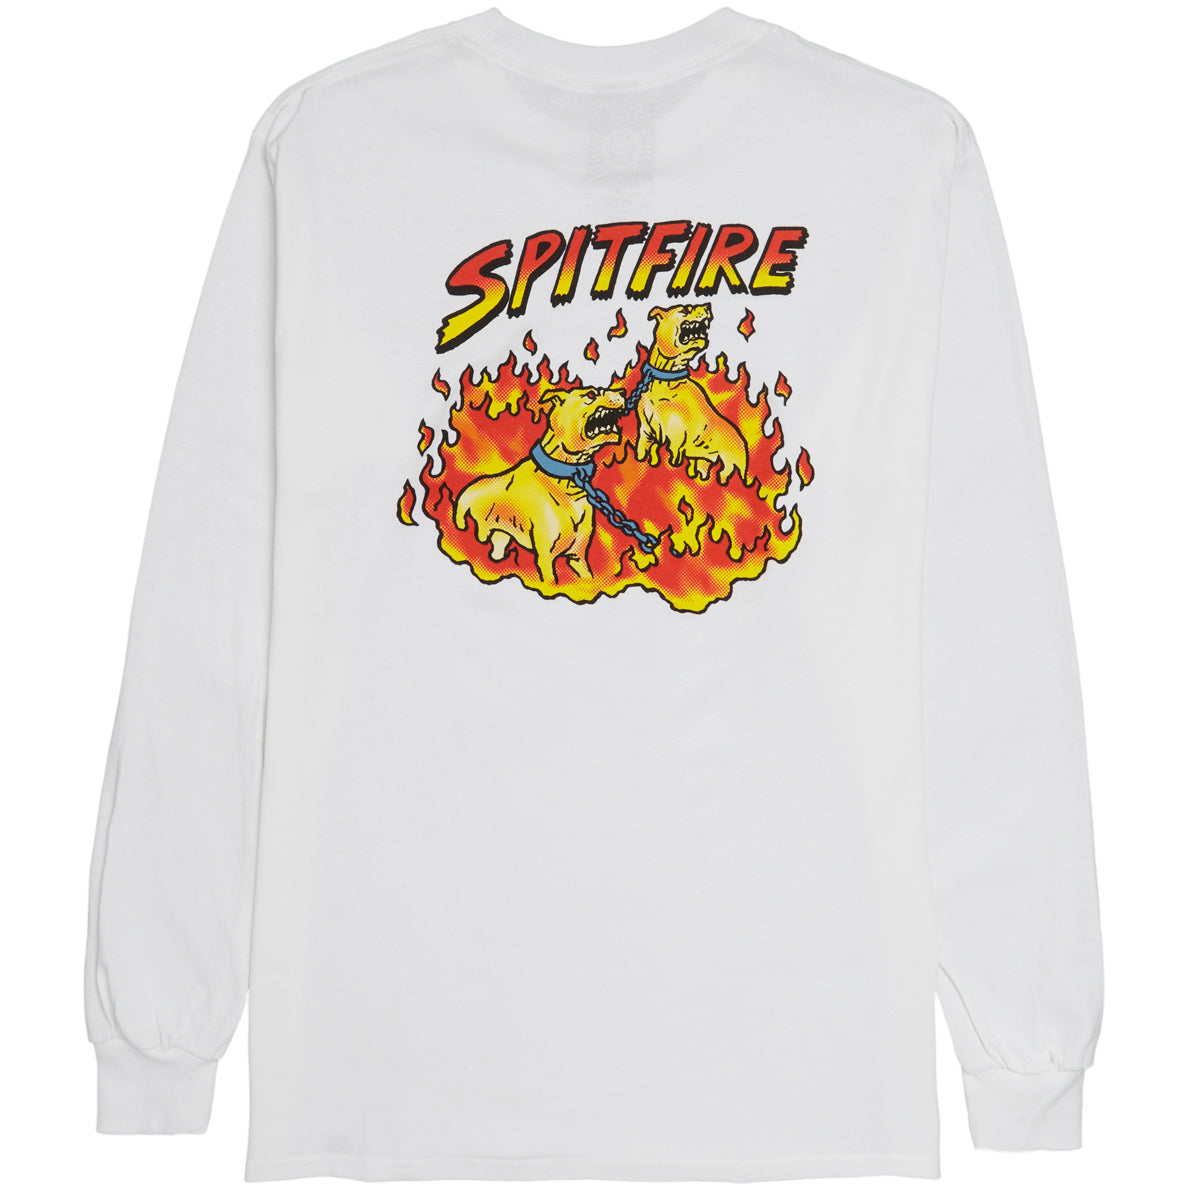 Spitfire Hell Hounds II Long Sleeve T-Shirt - White/Multi image 1